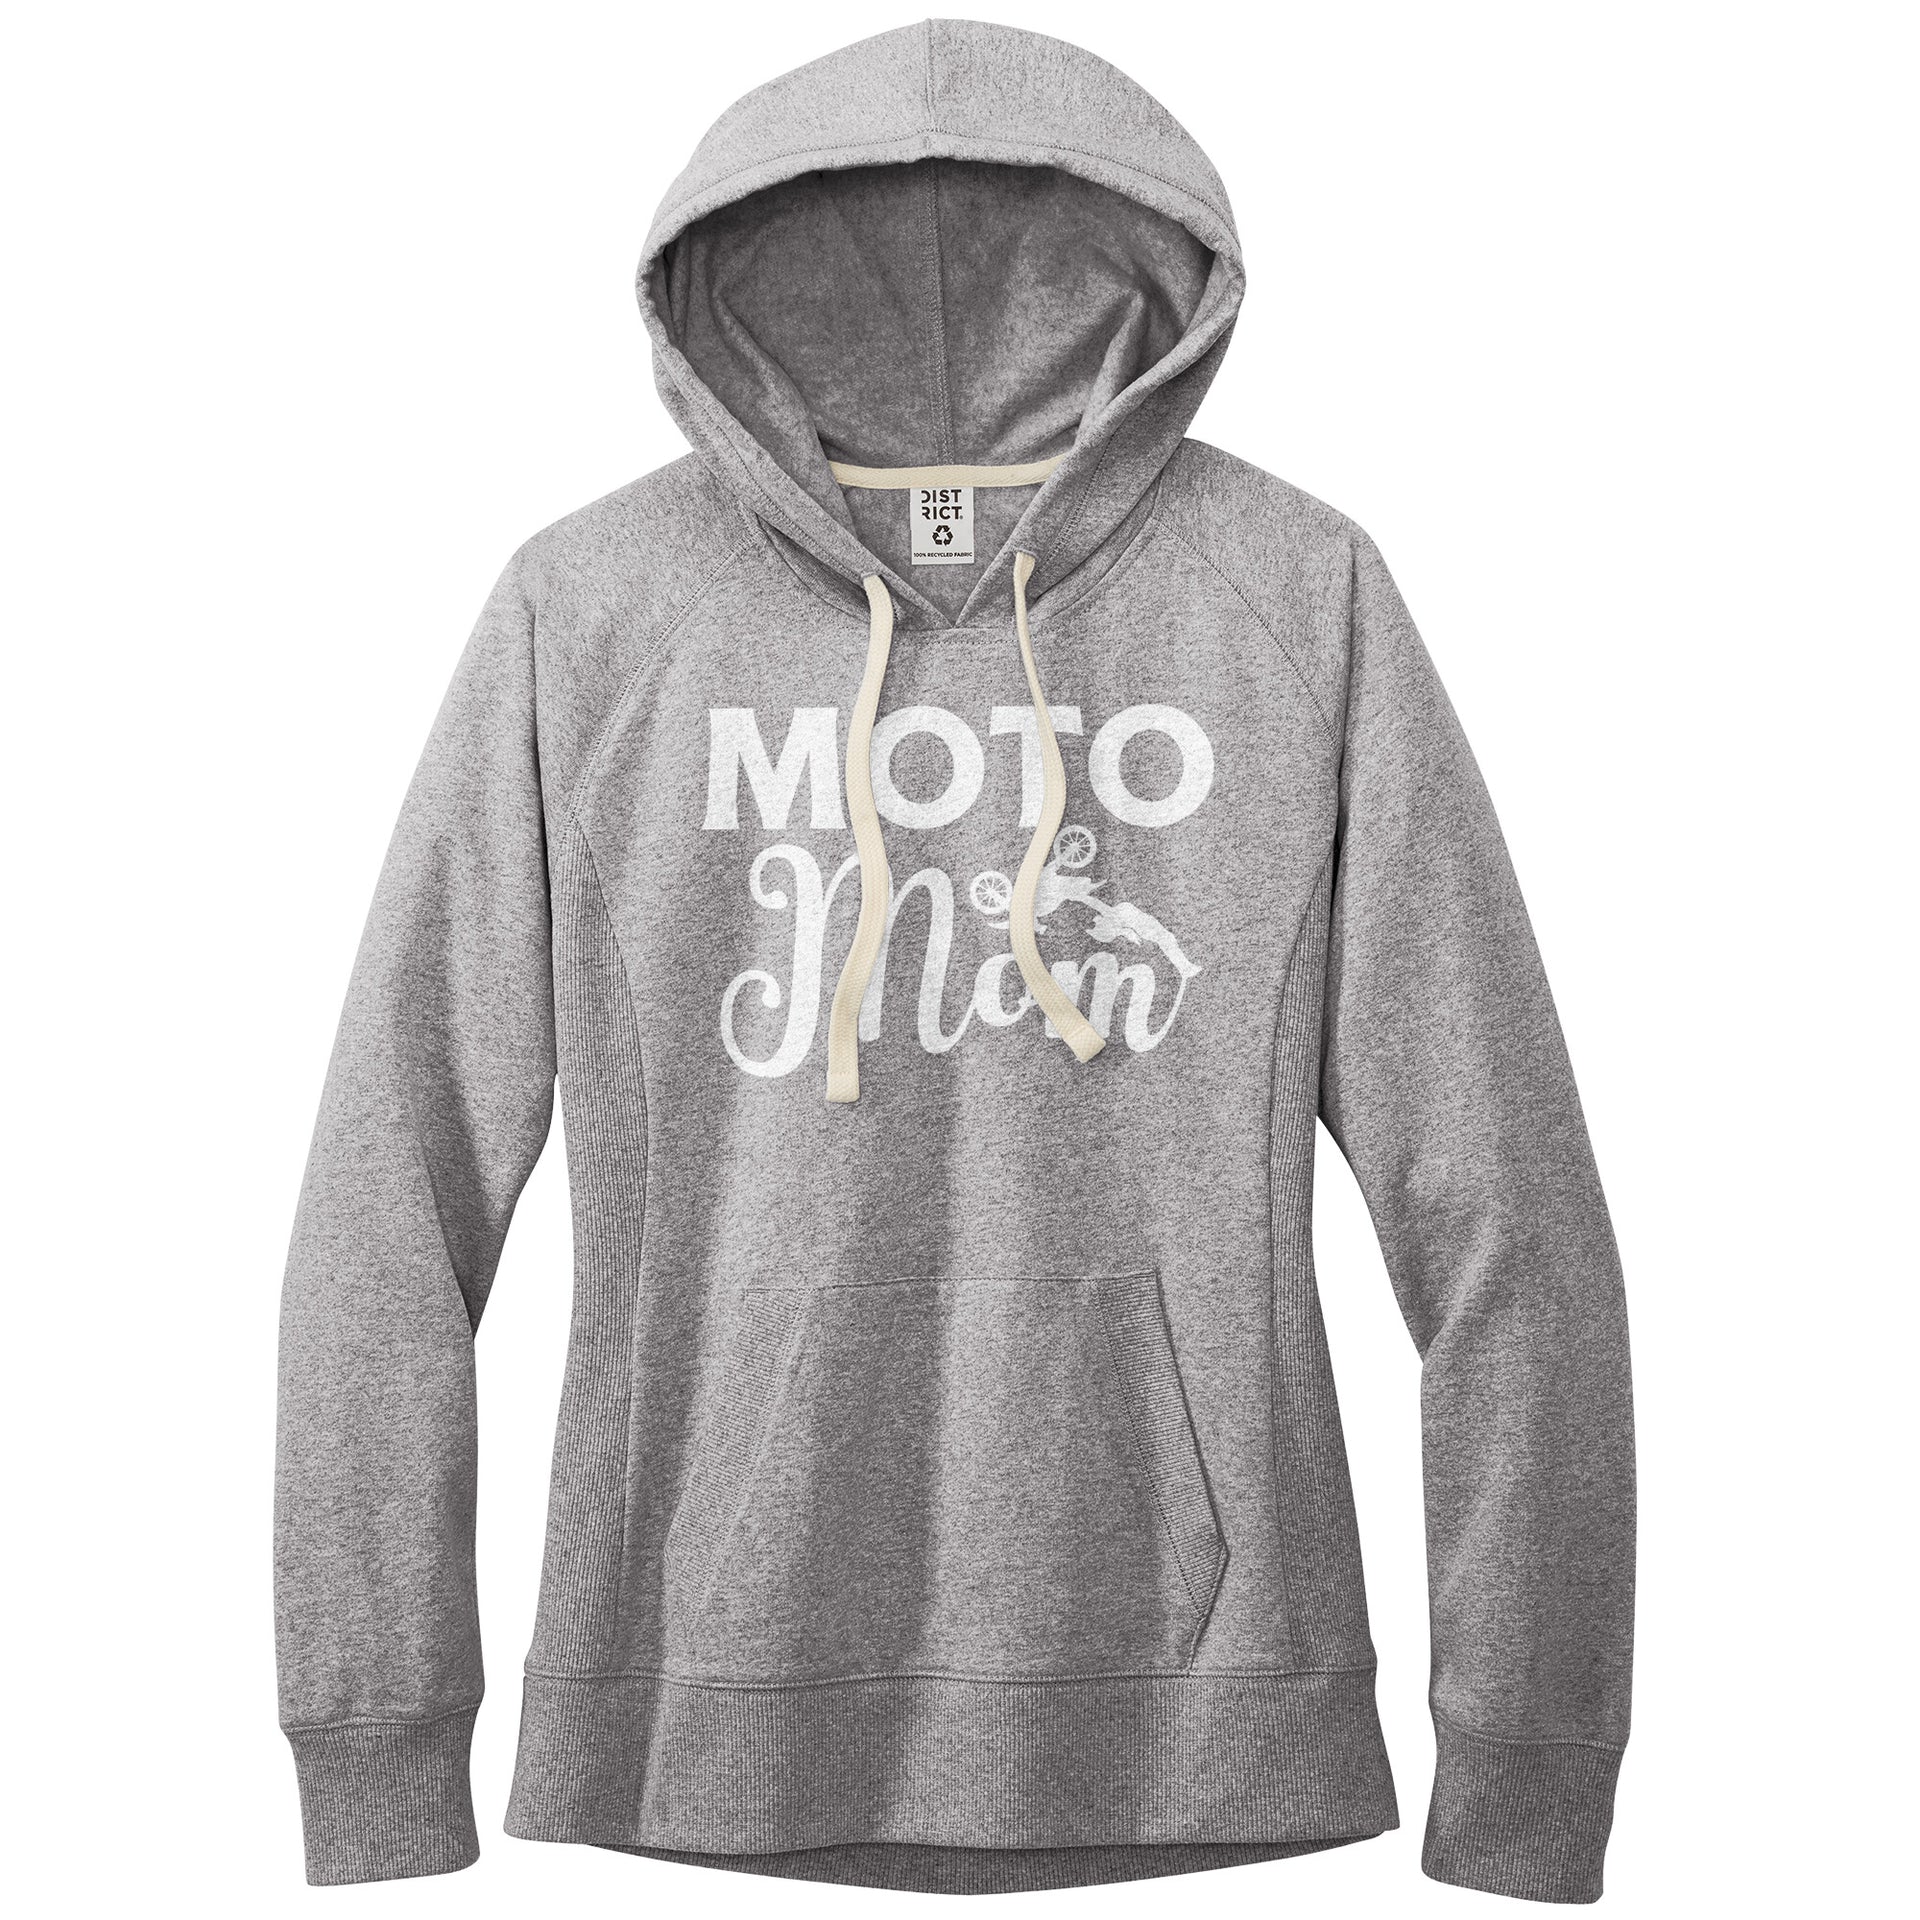 Motocross mom hoodies